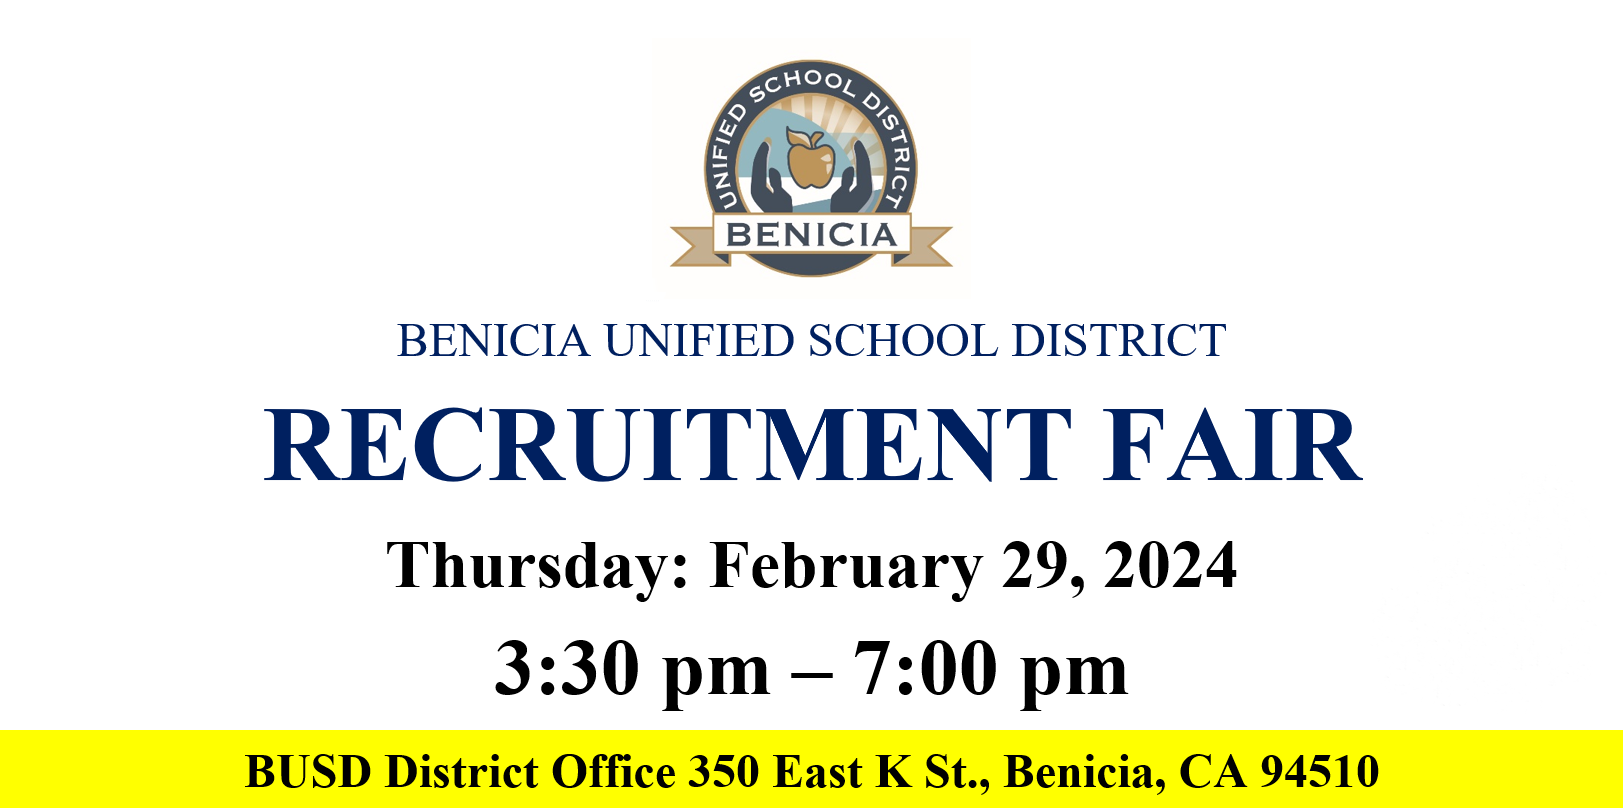 RECRUITMENT FAIR Thursday - February 29, 2024 3:30pm - 7:00pm BUSD District Office 350 East K St, Benicia, CA 94510